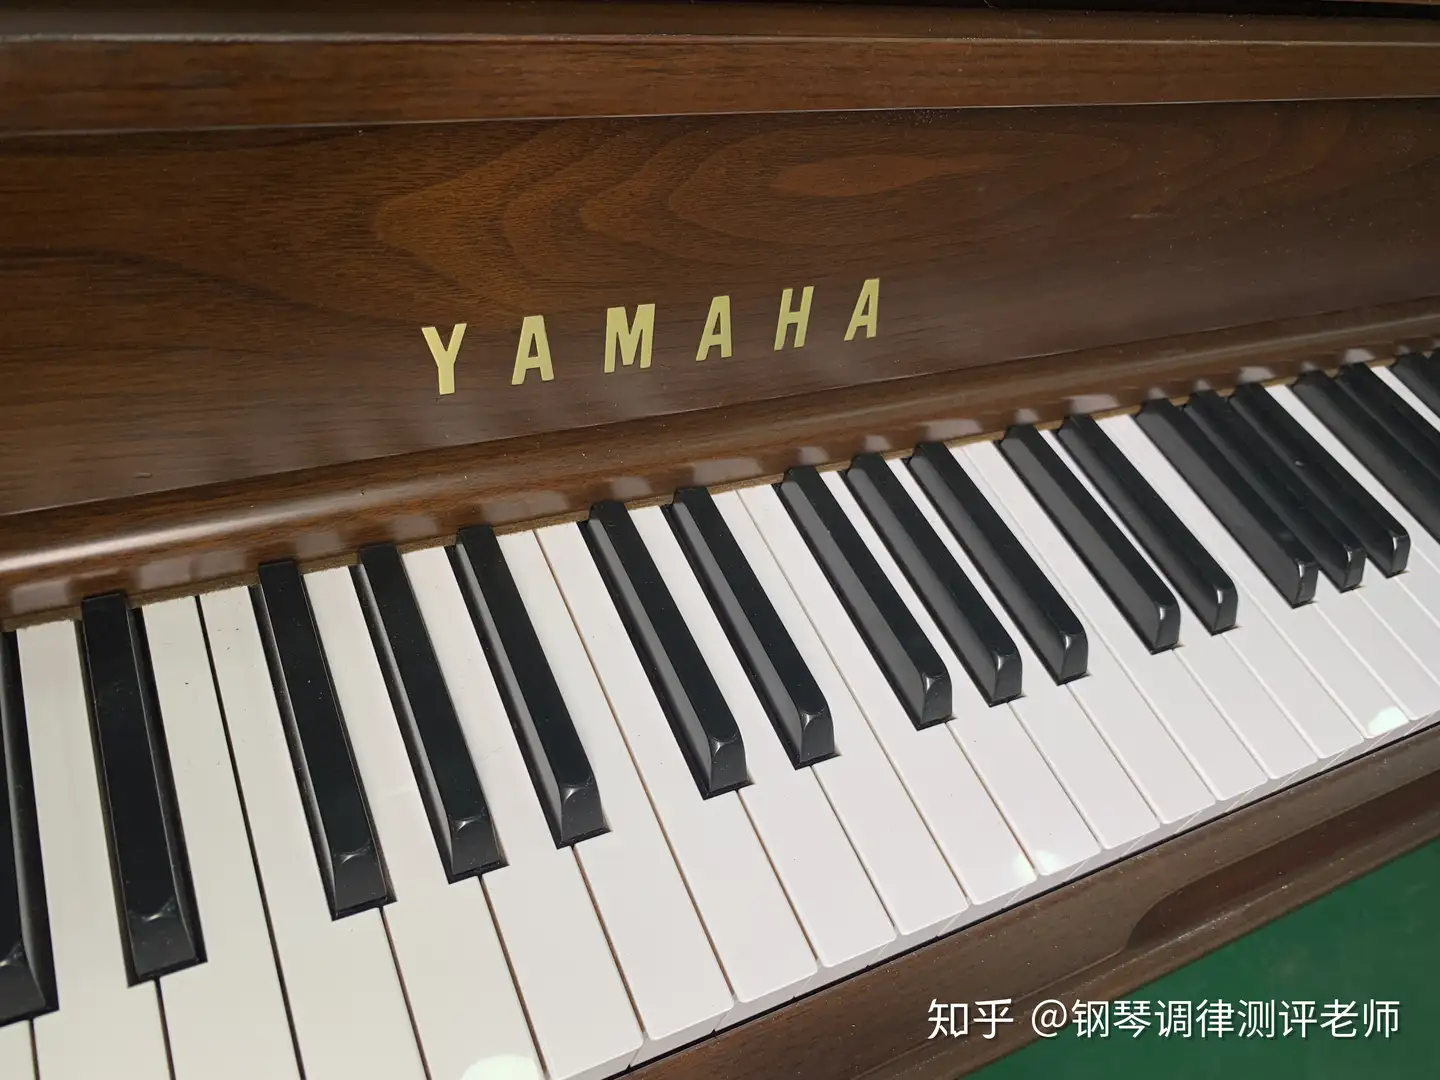 YAMAHA】日本原产YAMAHA钢琴各系列型号解析- 知乎